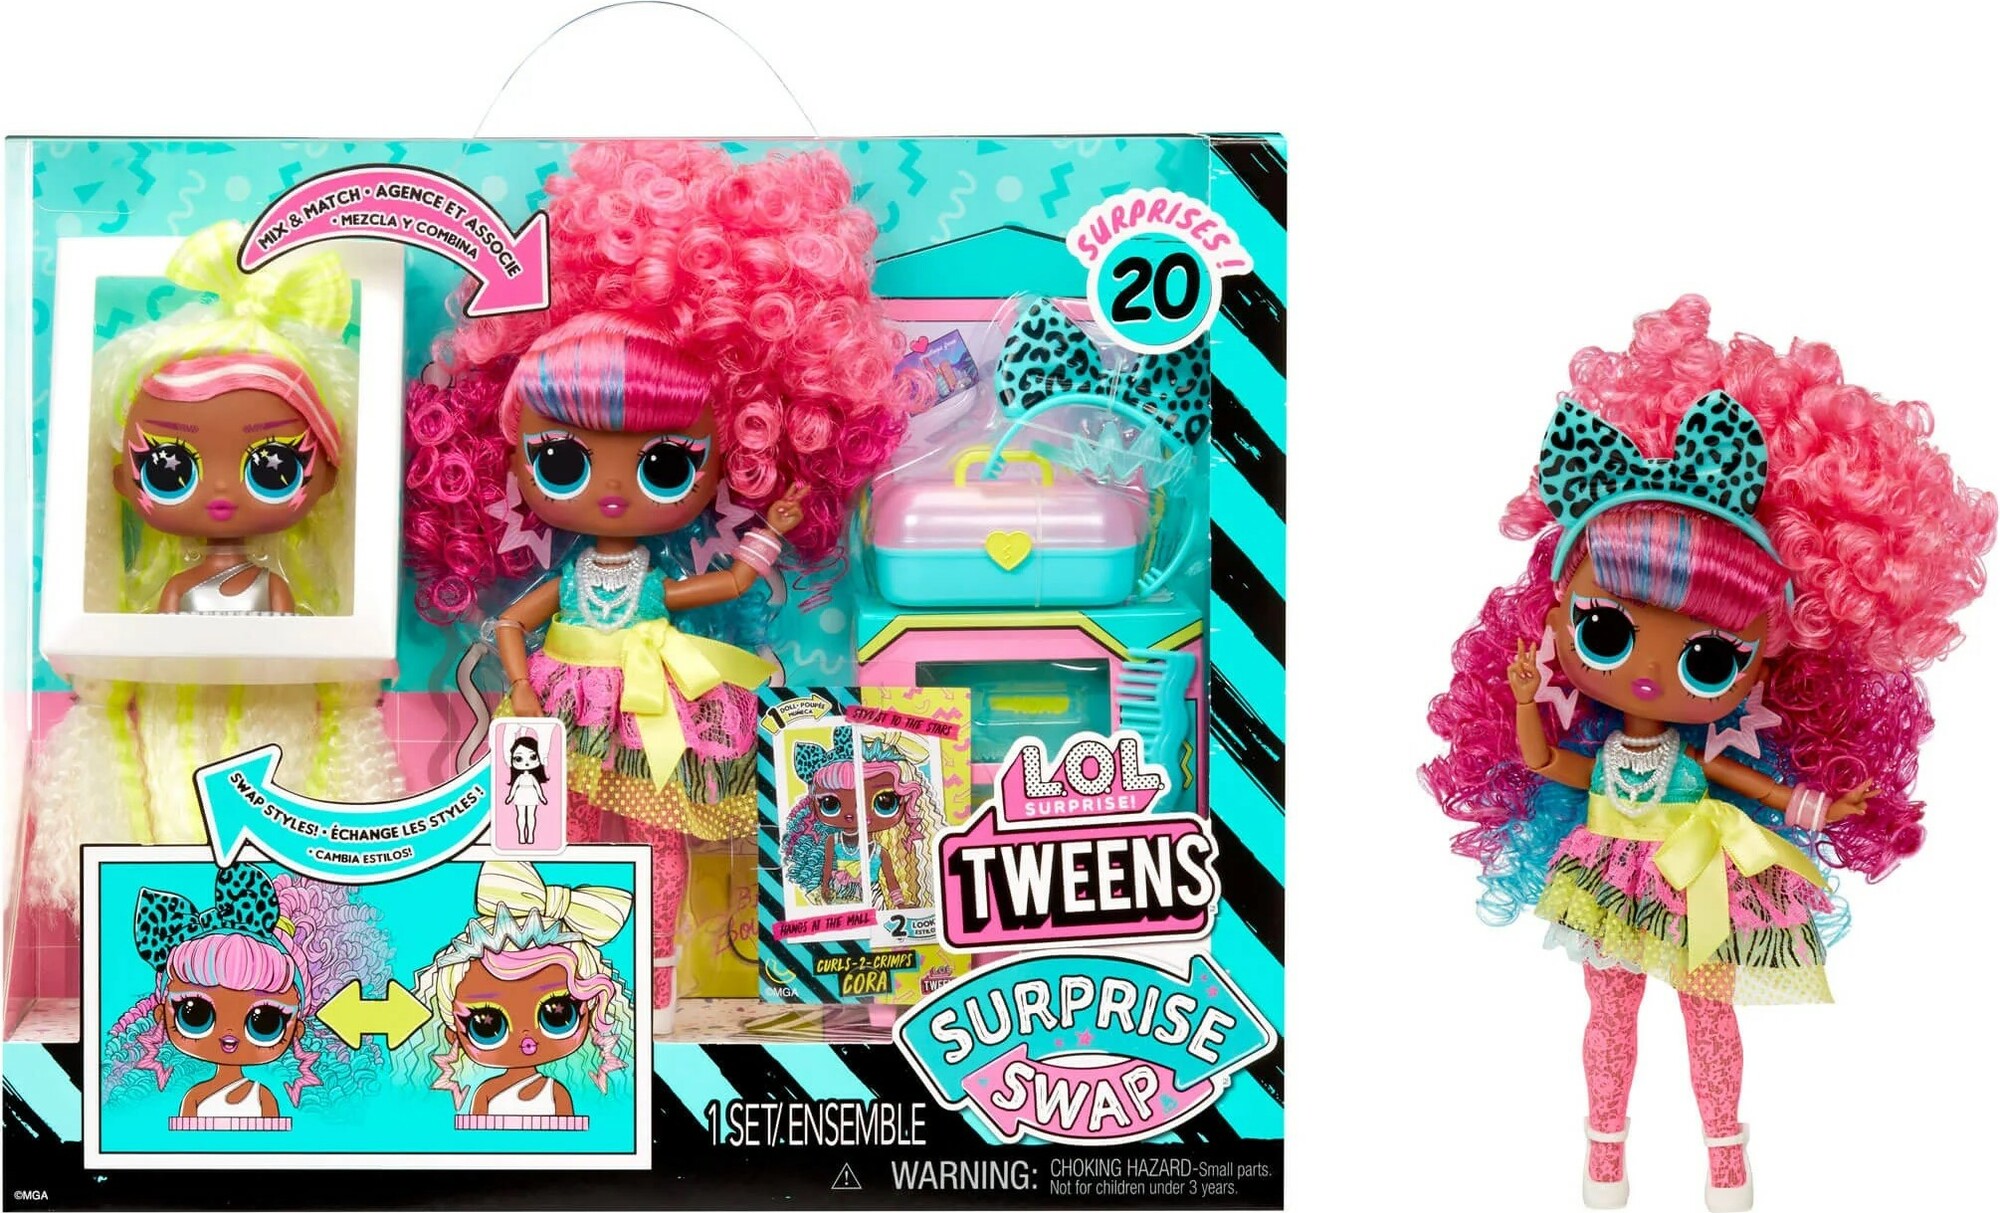 LOL Surprise! Swap Tweens panenka a mini Tweens česací hlava - Cora